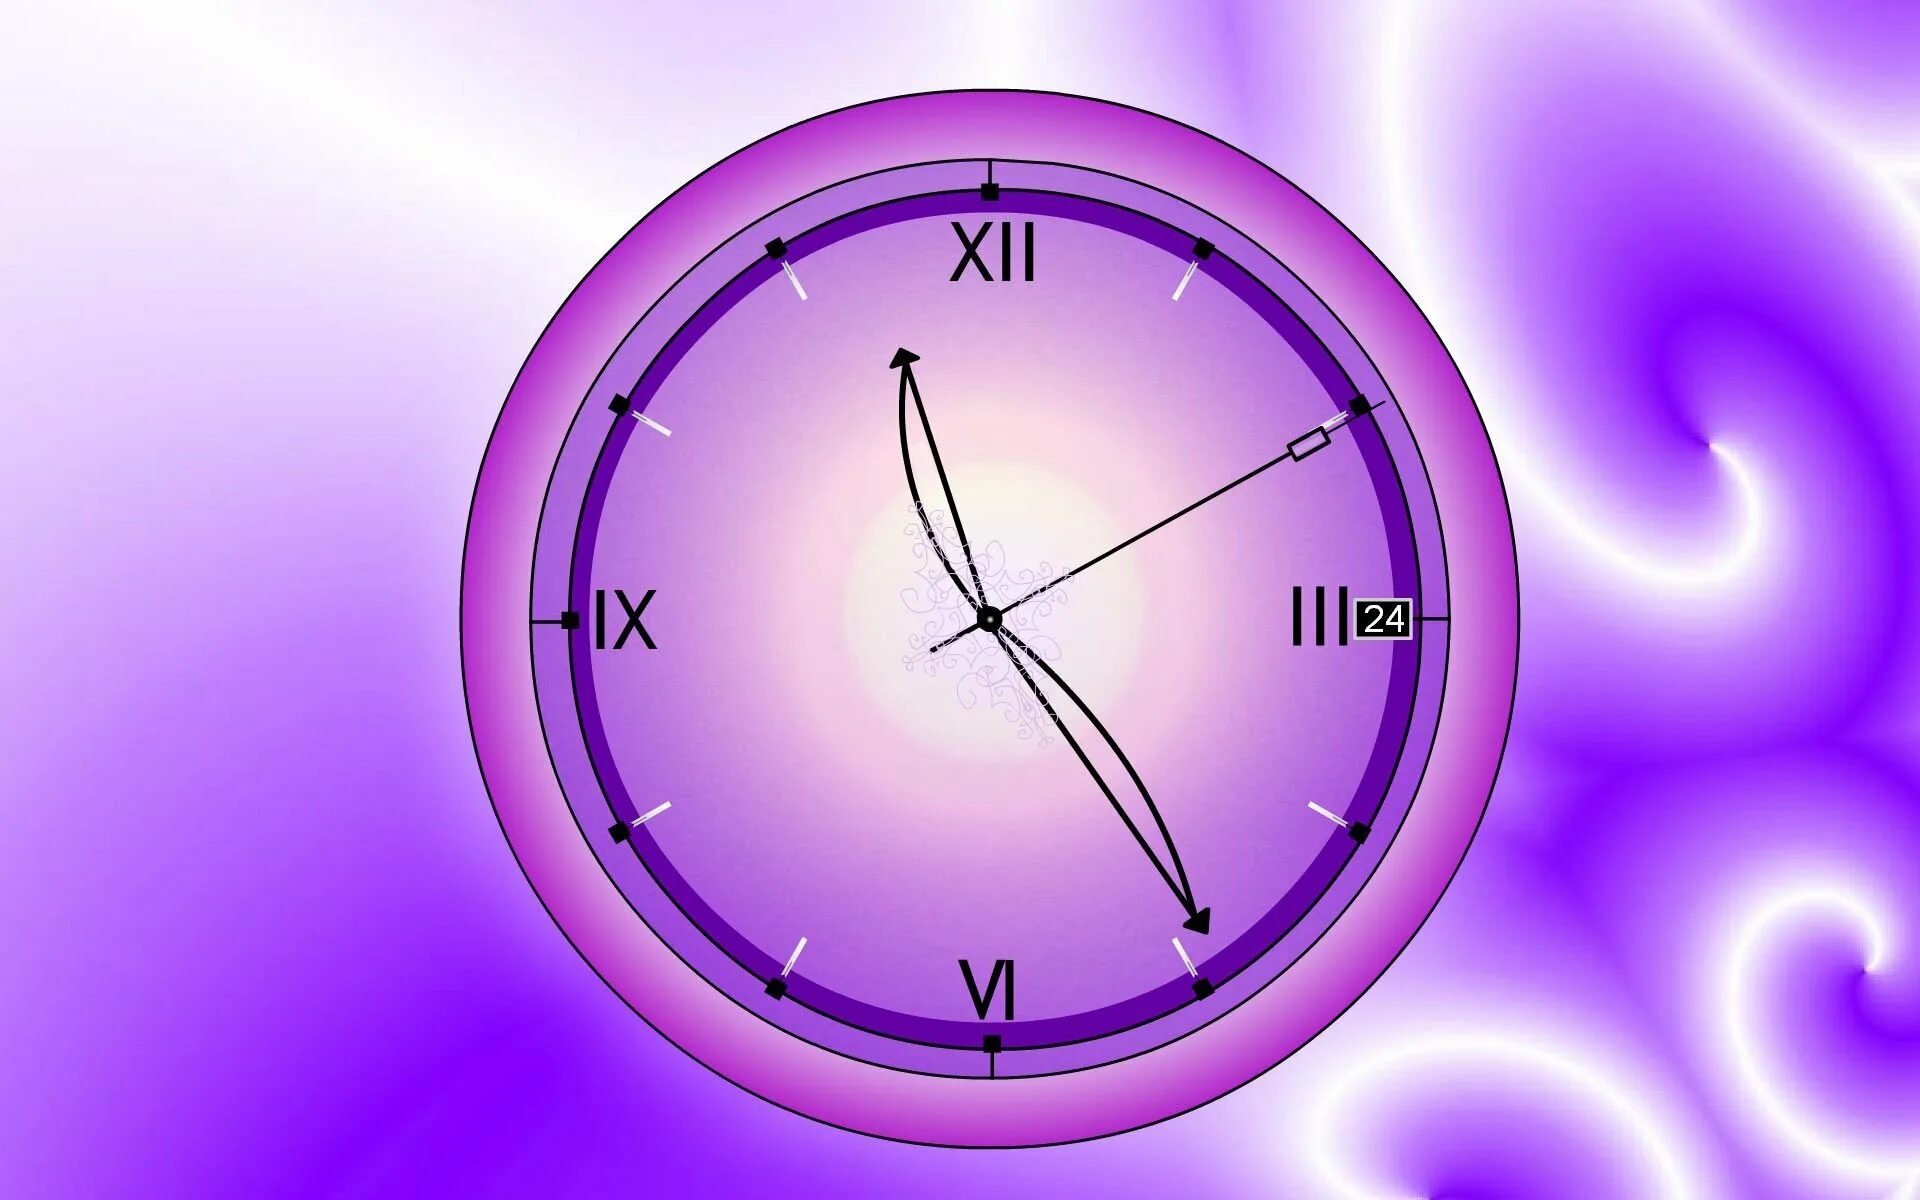 Время живой часы. Заставка на часы. Часы на фиолетовом фоне. Часы на красивом фоне. Живые обои часы.